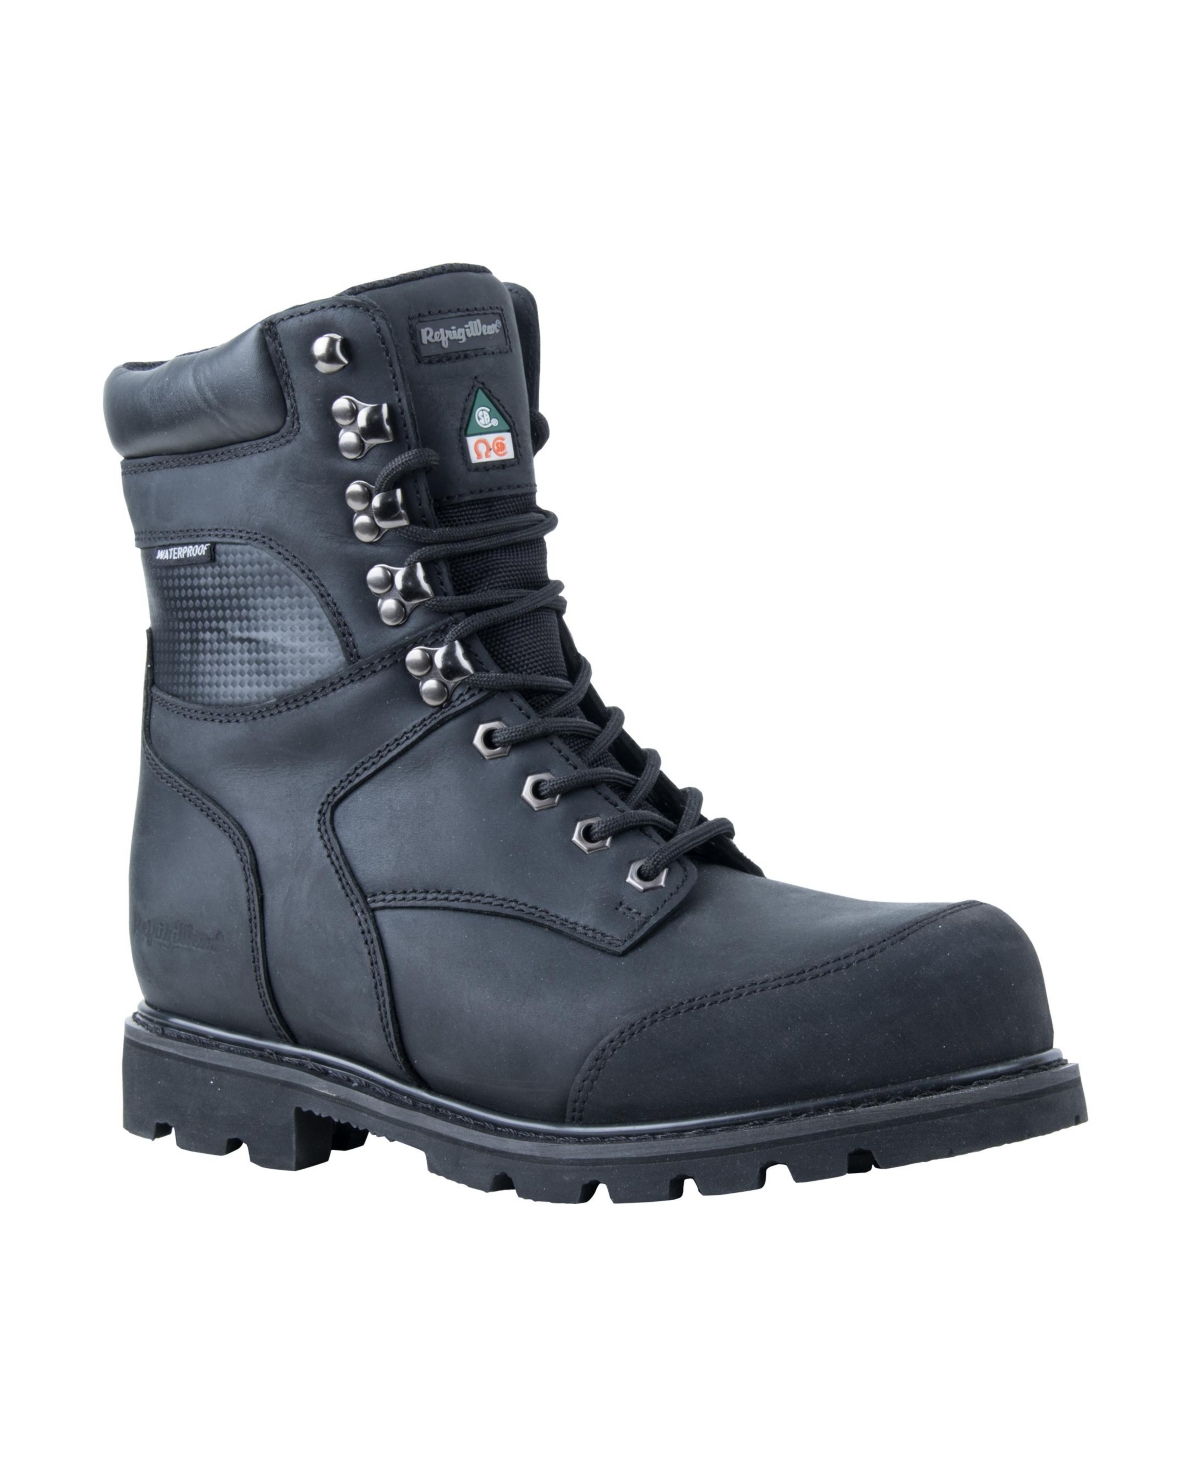 Men's Platinum Leather Warm Insulated Waterproof Non-Slip Work Boots - Black